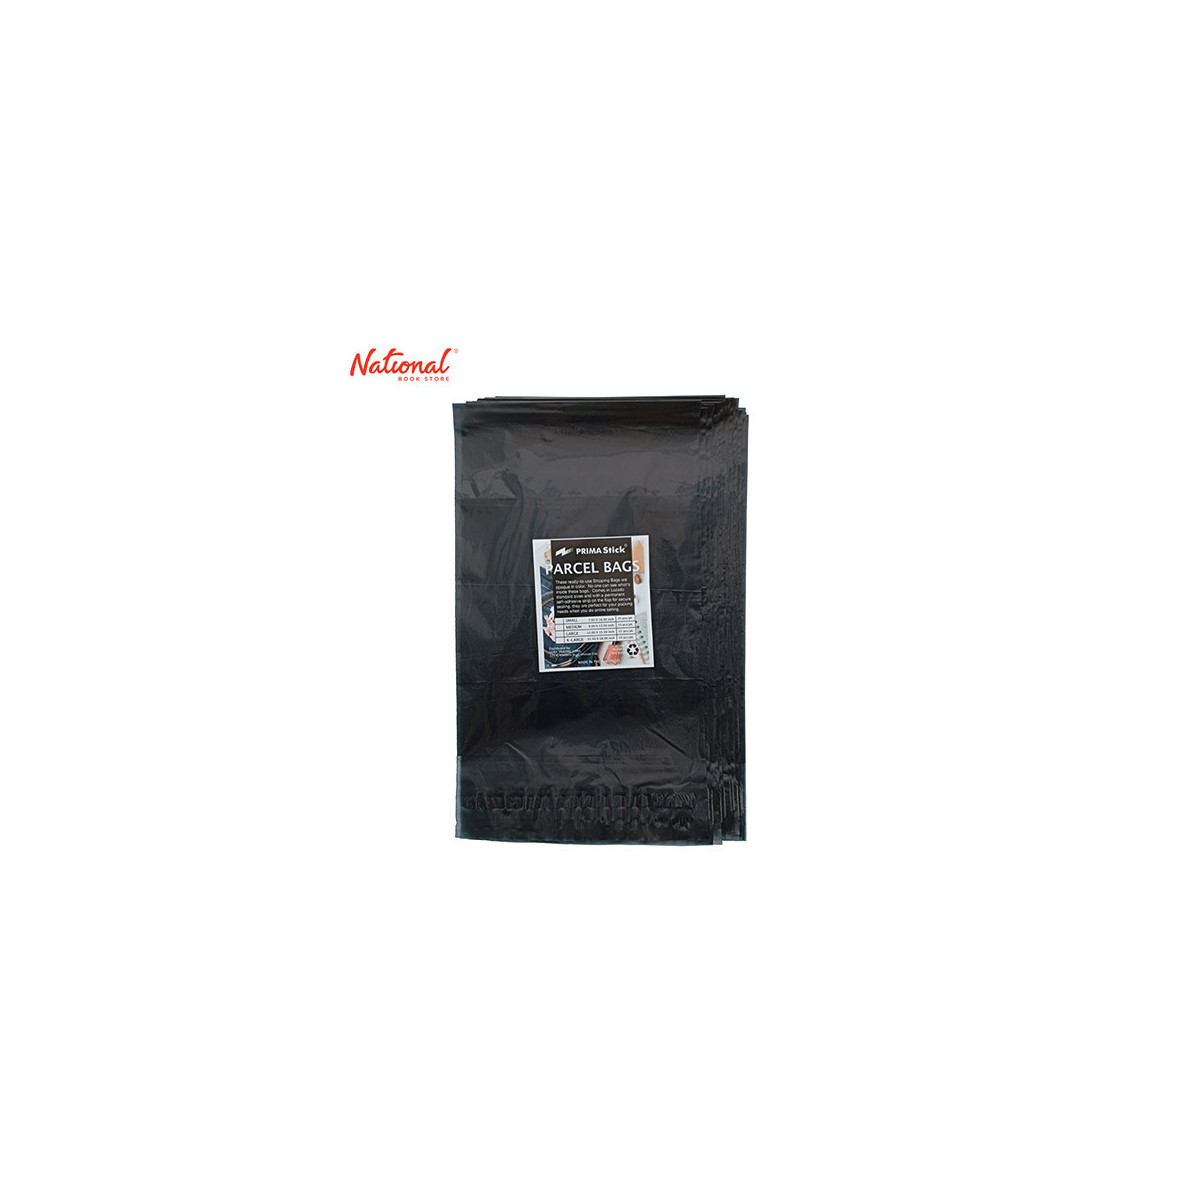 Prima Parcel Bag xlarge Black 10S 12x18 Inch 0.3 Microns